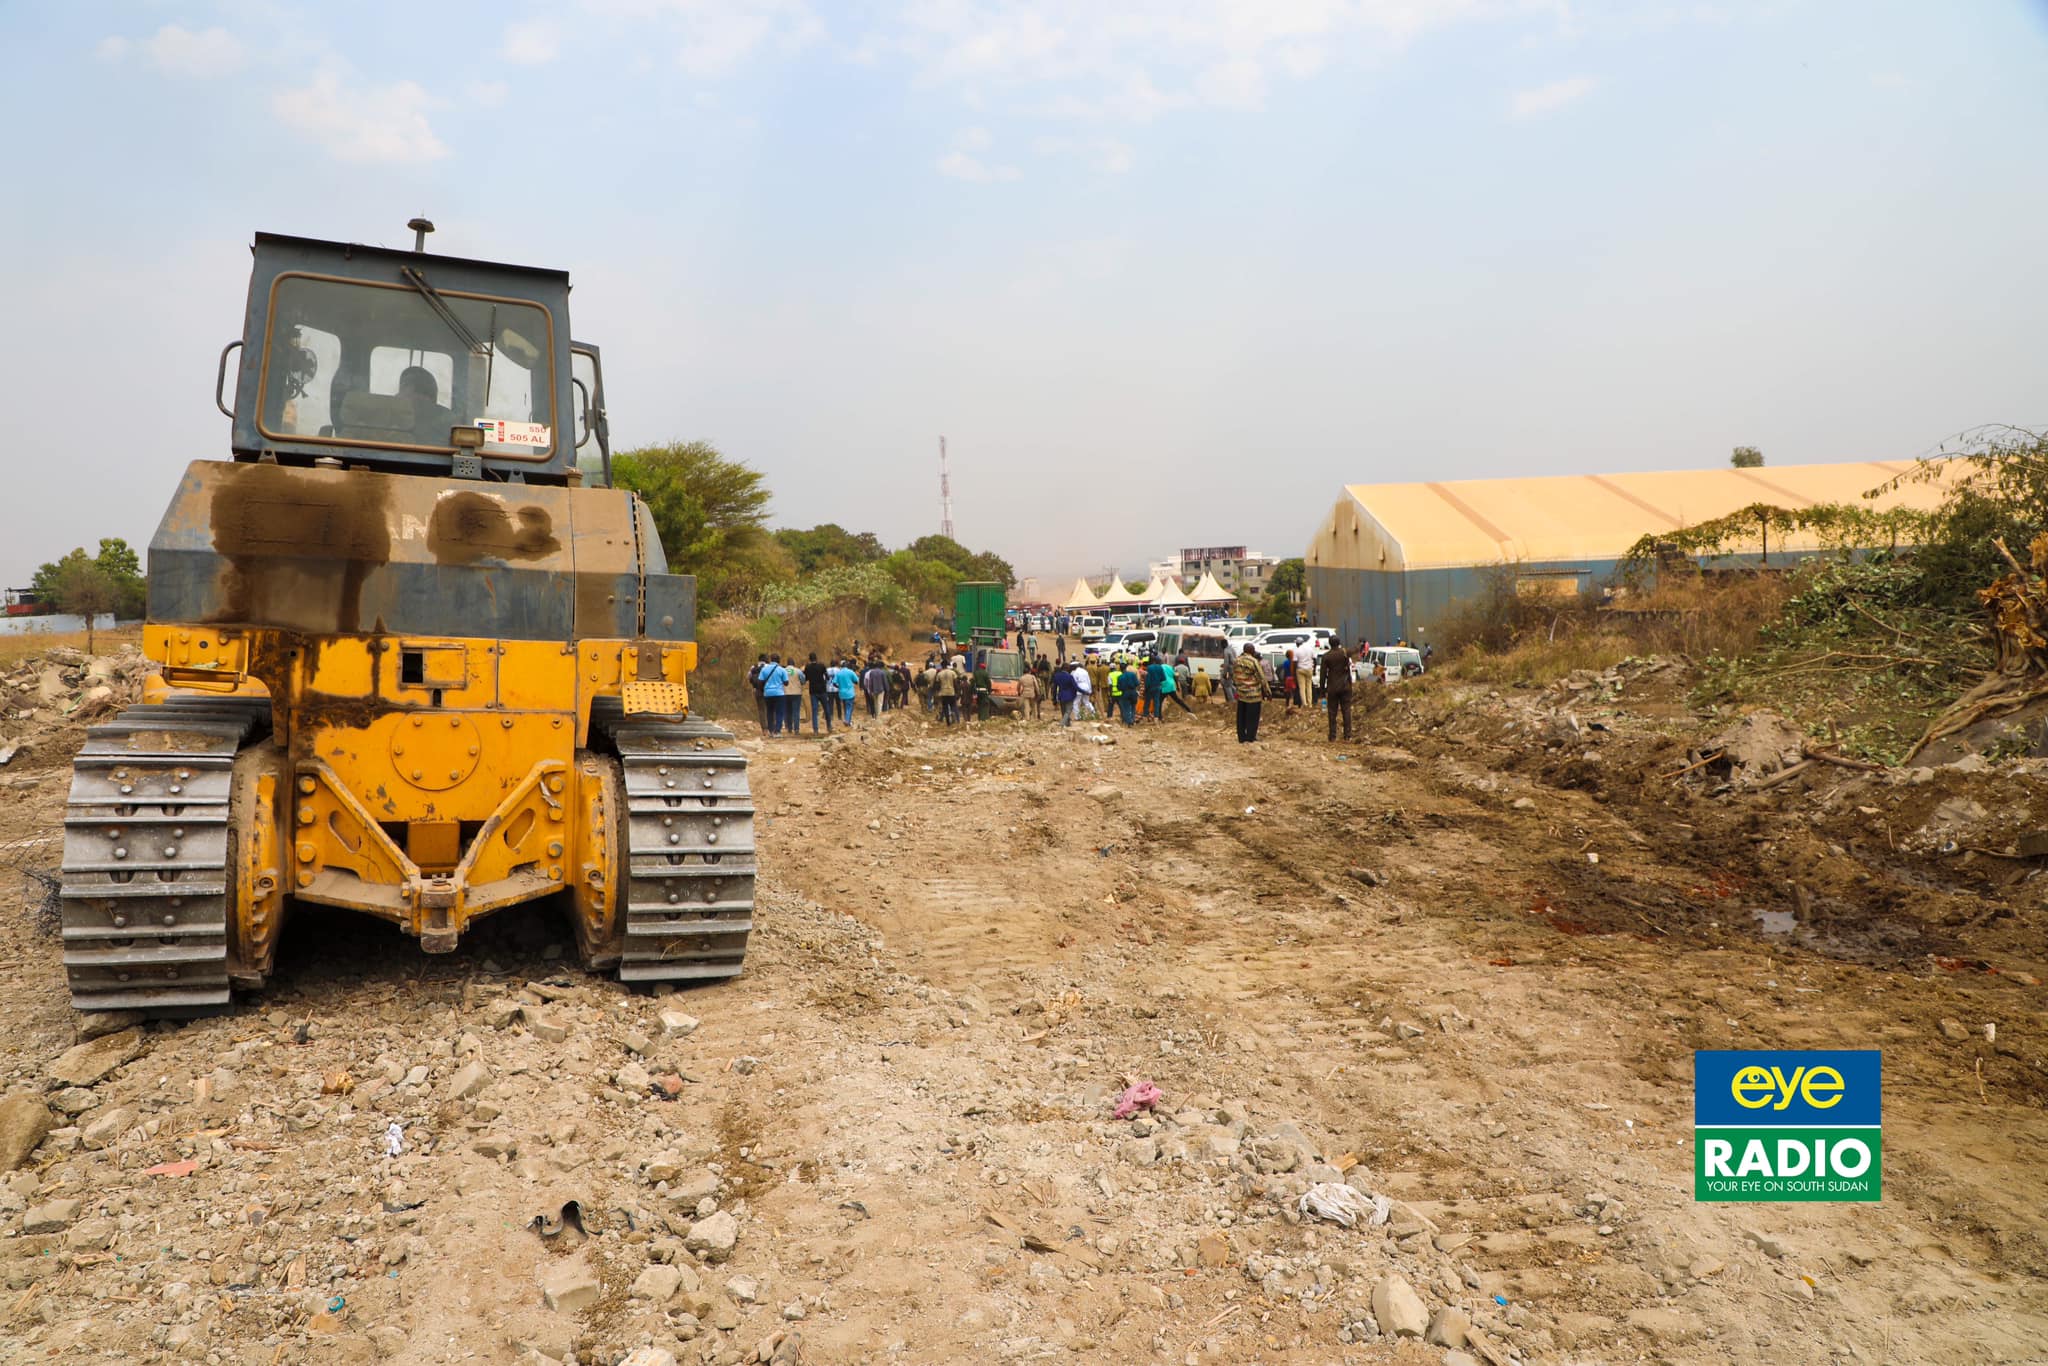 Gov’t launches 35 km road construction in Juba worth $35M